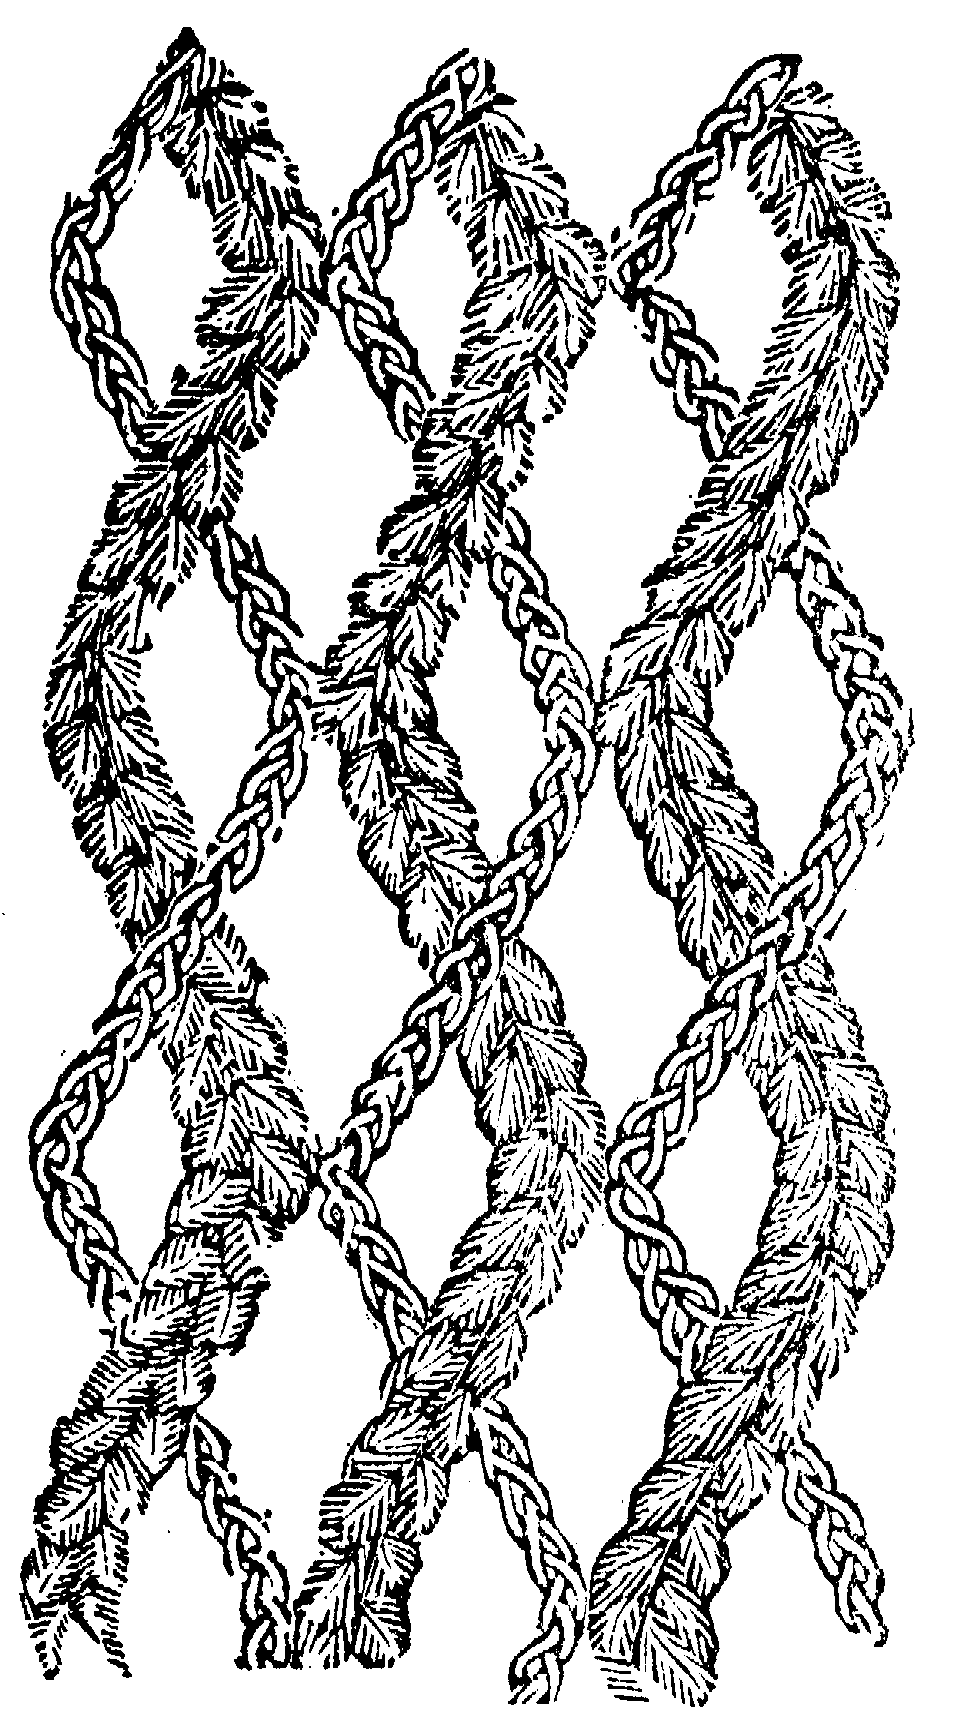 Chenille pattern No. 3